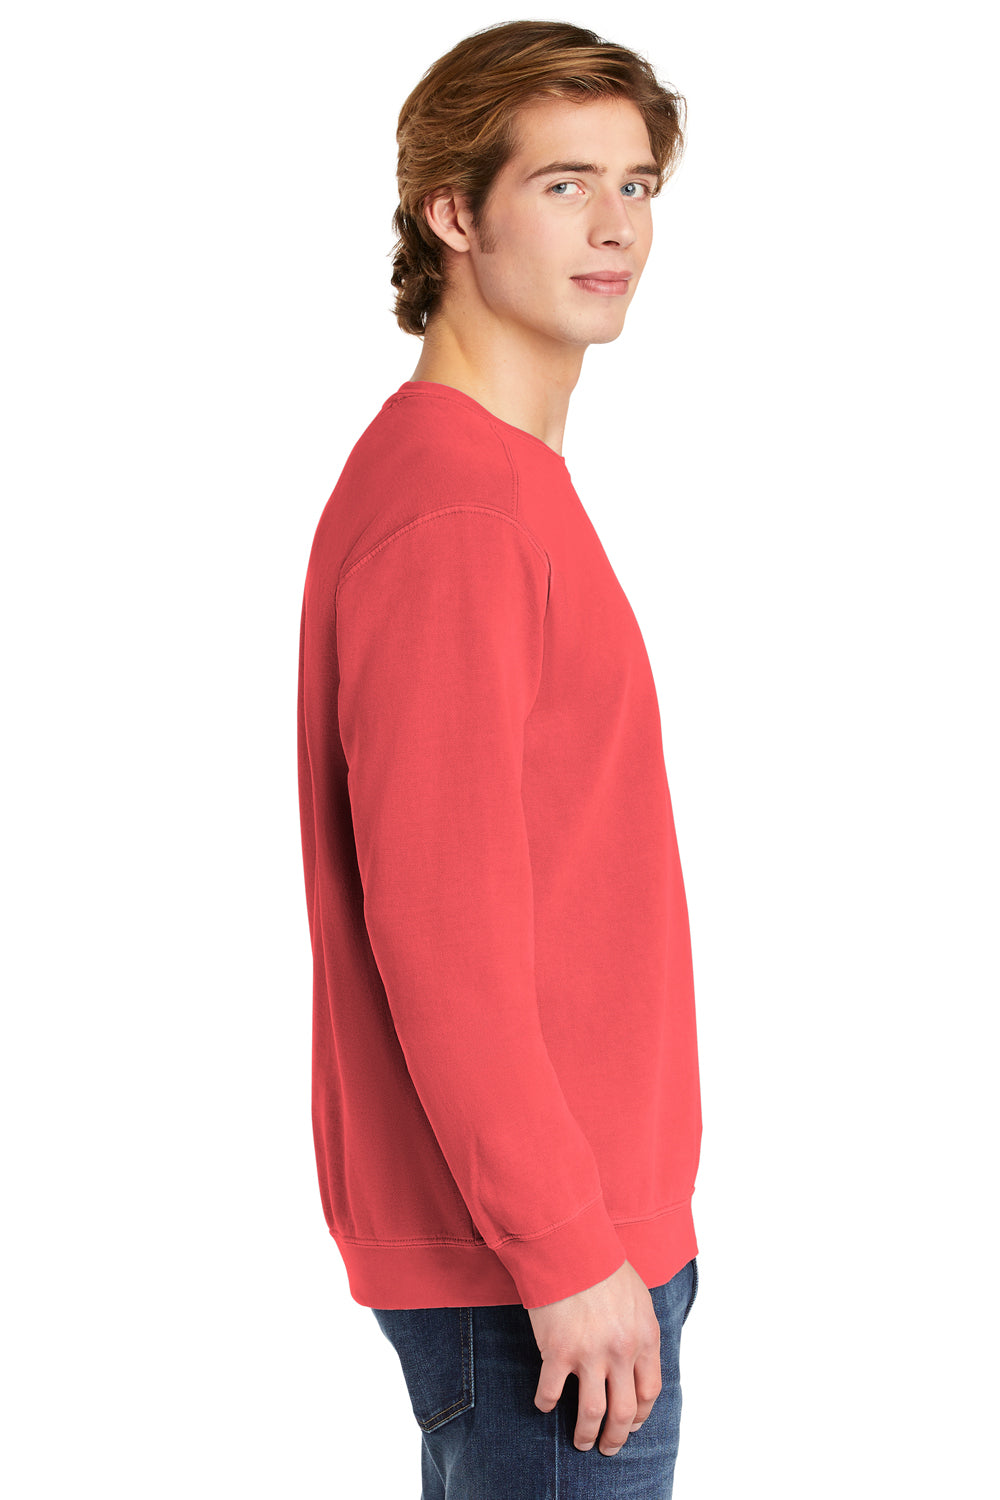 Comfort Colors 1566 Mens Crewneck Sweatshirt Watermelon Pink Side